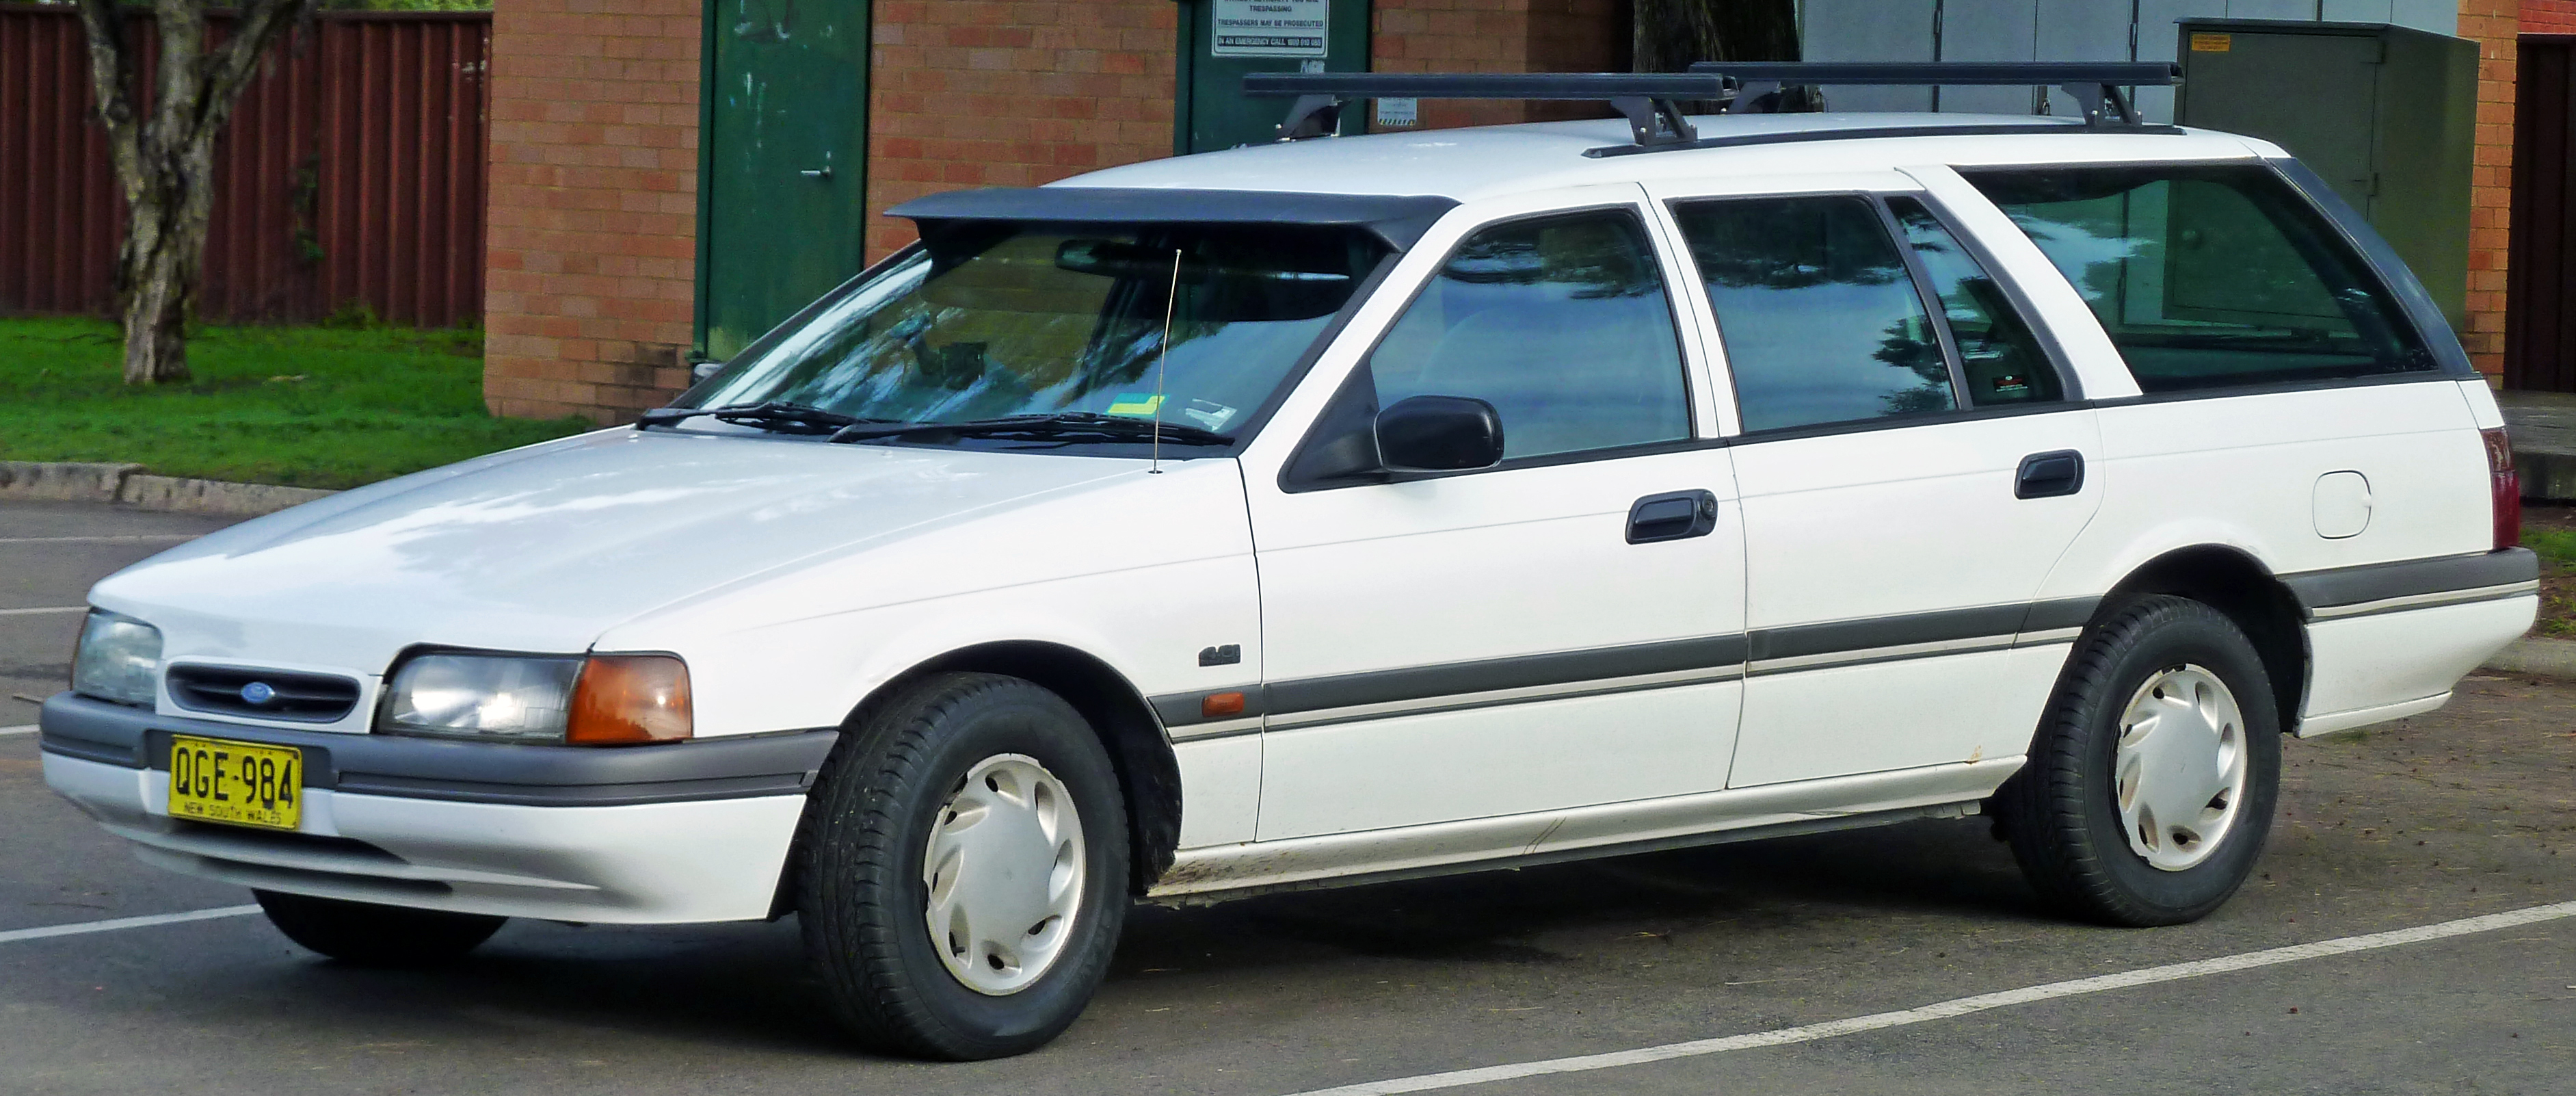 1993 Ford taurus station wagon parts #3